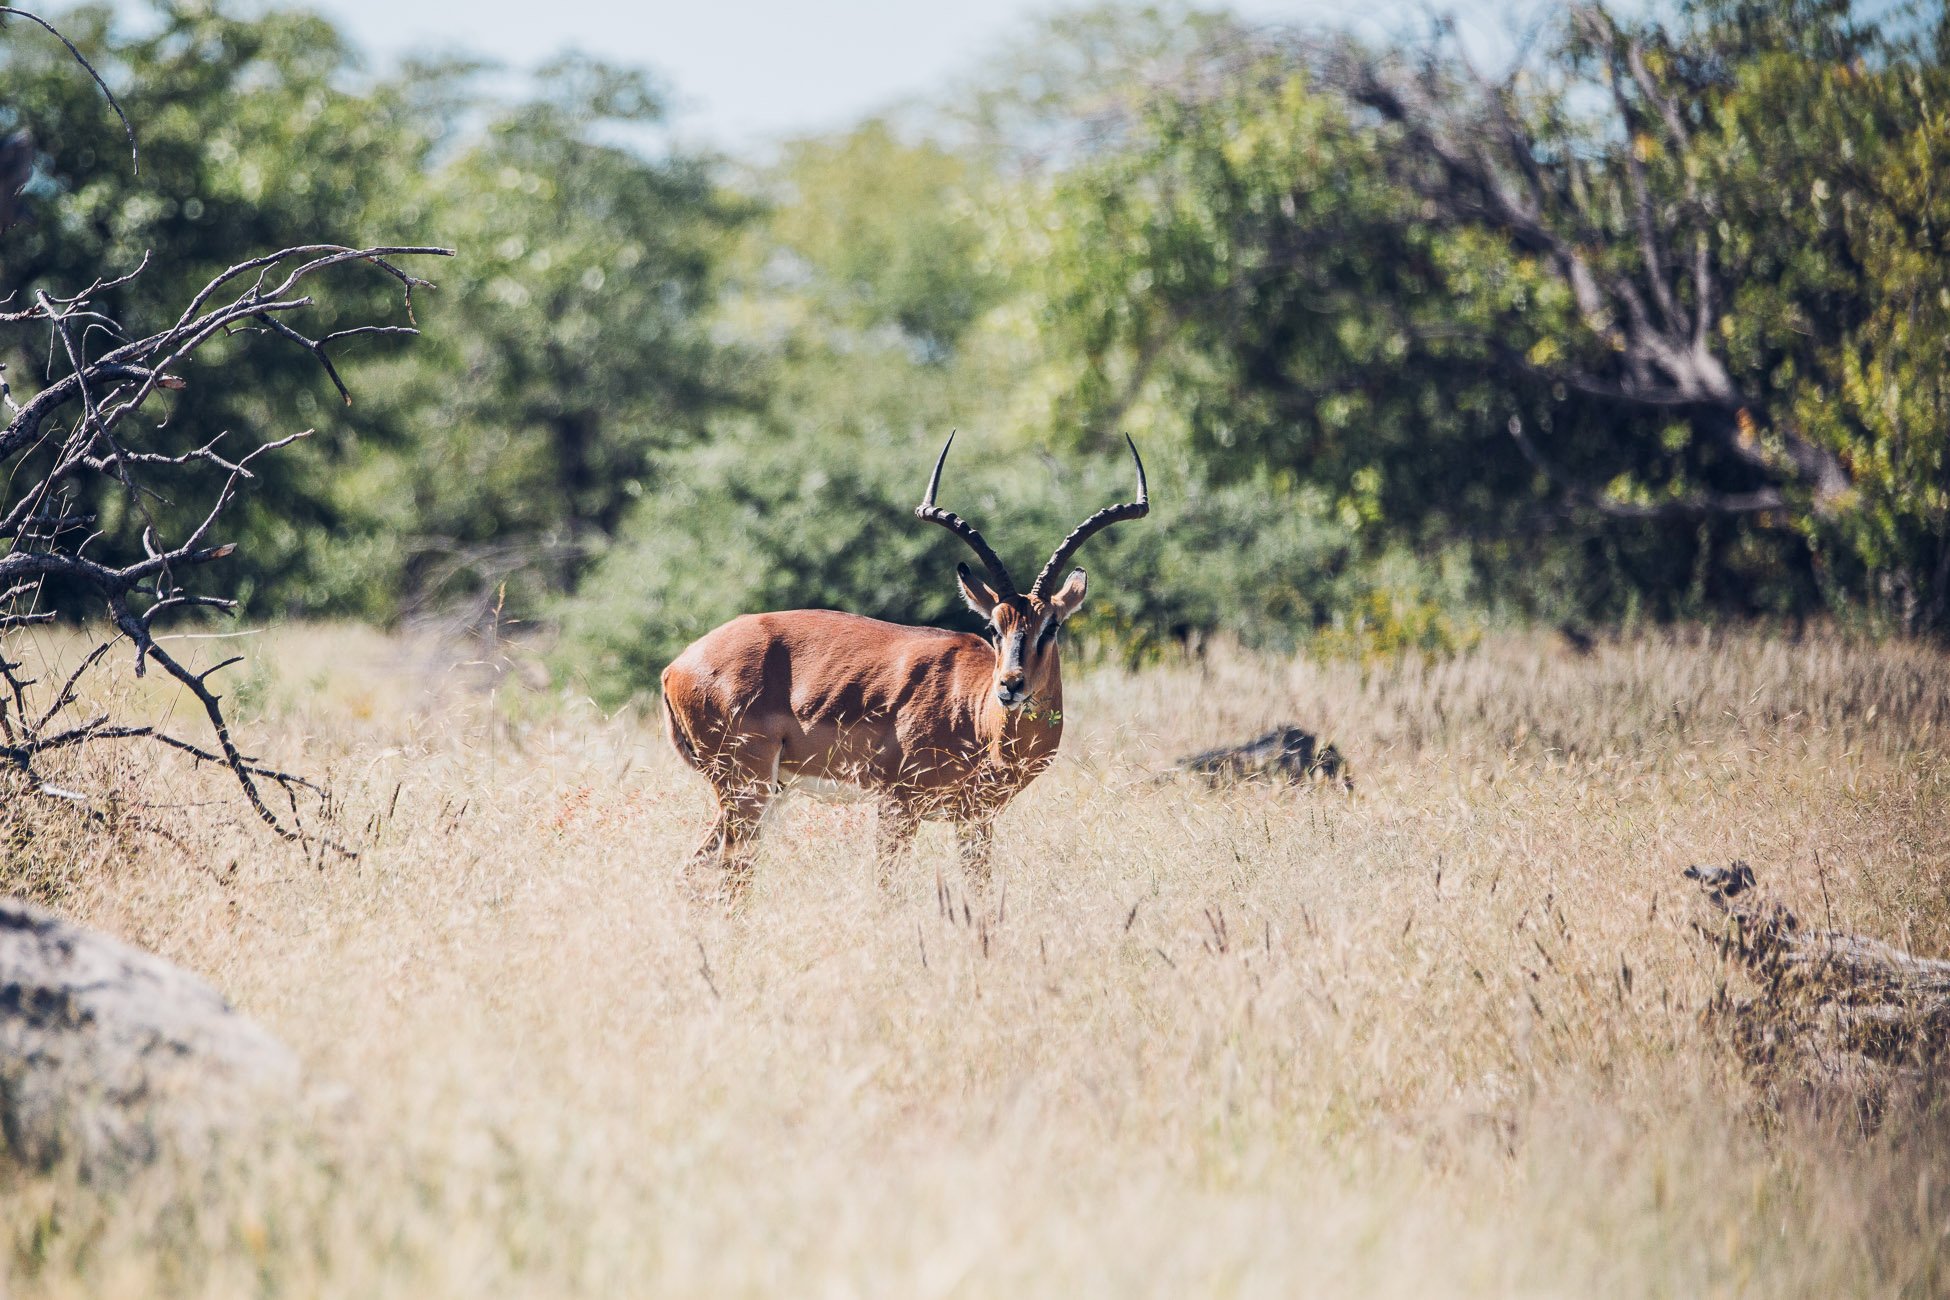 Wildlife at Etosha National Park